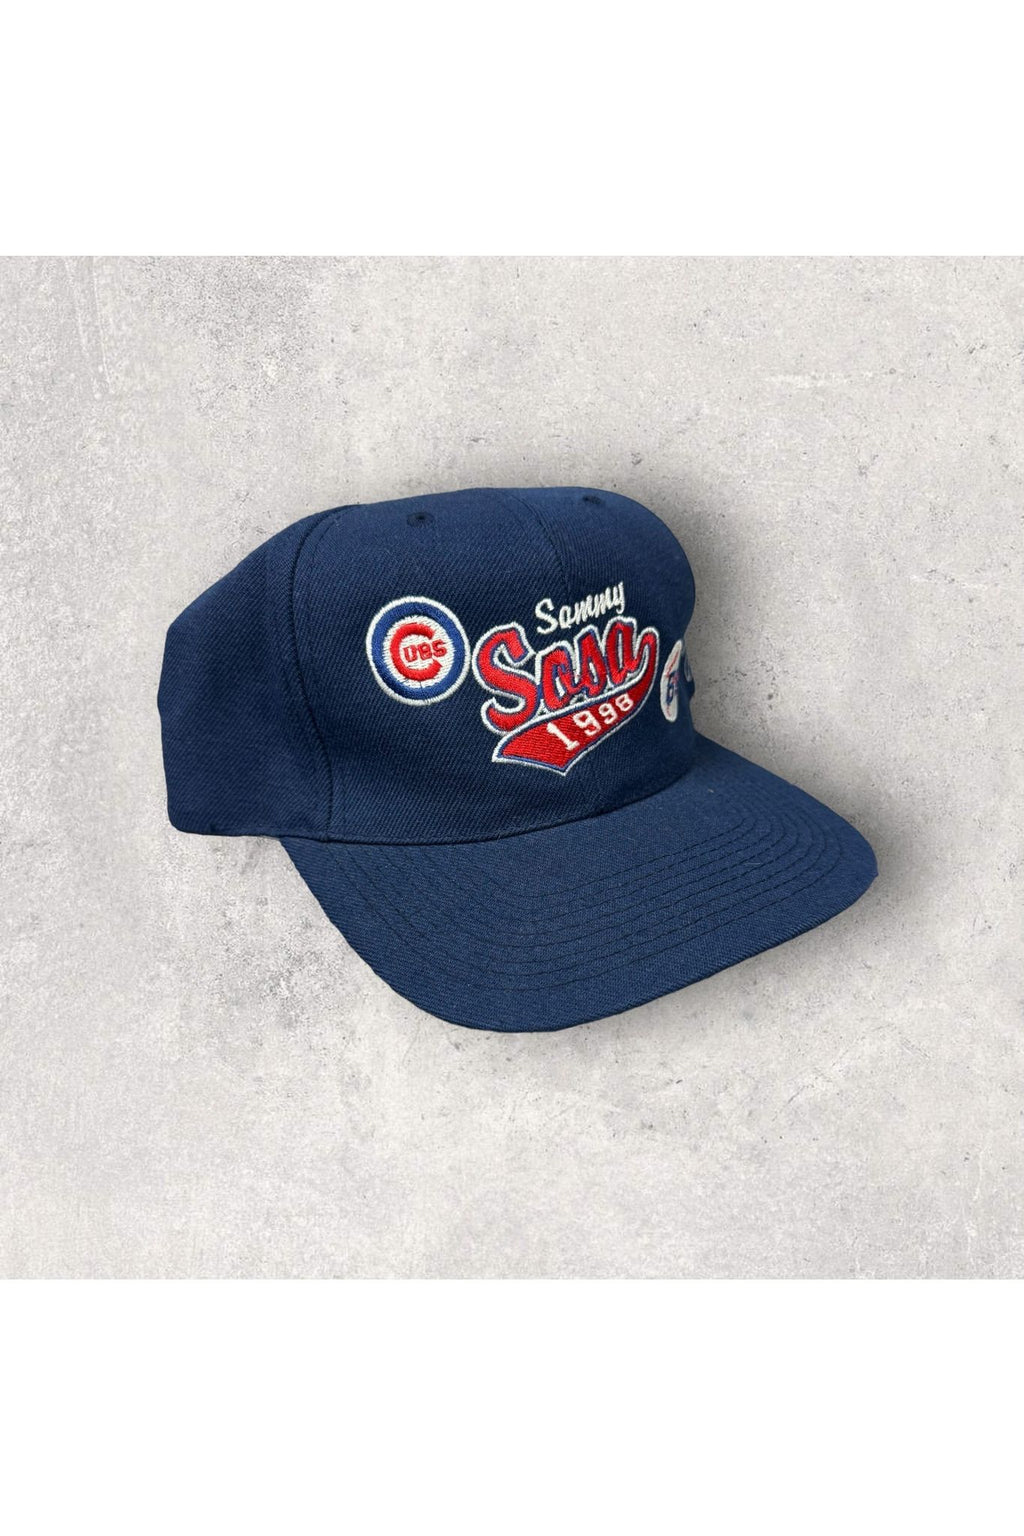 Vintage Sports Specialties 1998 Chicago Cubs Sammy Sosa Snapback